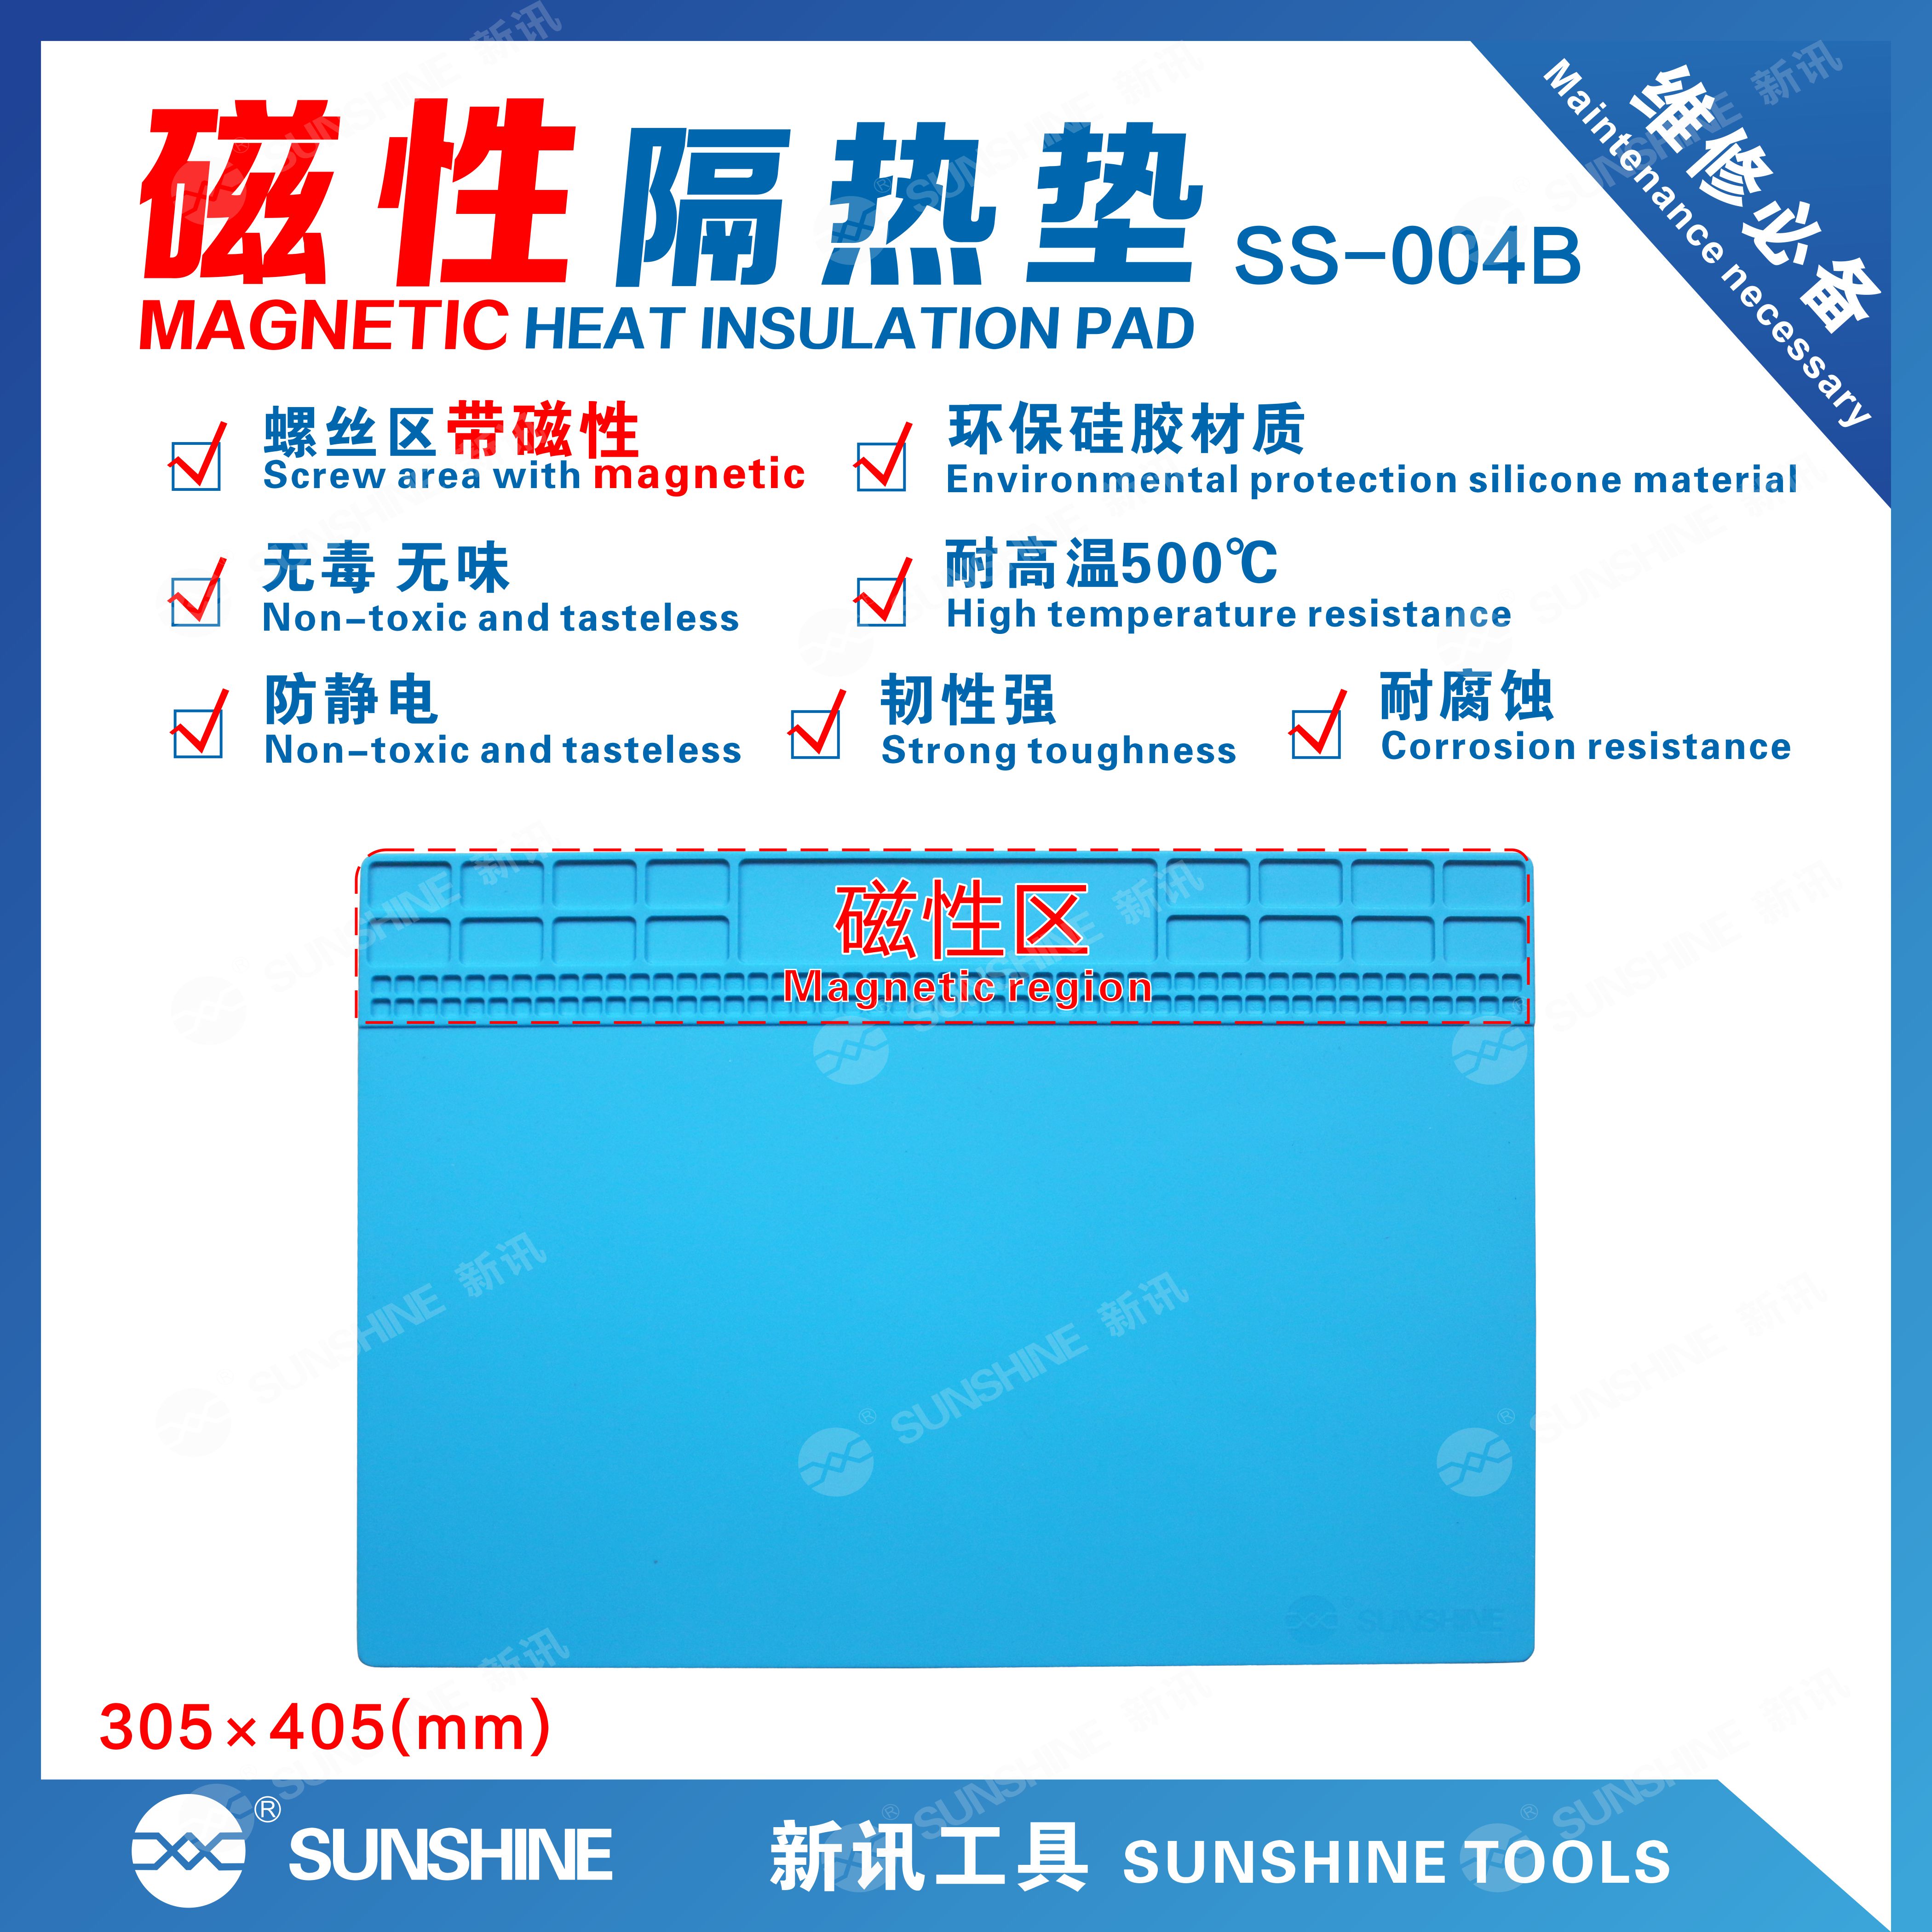 SUNSHINE SS-004B Magnetic Insulated Pad sunshine SS-004B Magnetic Insulated Pad